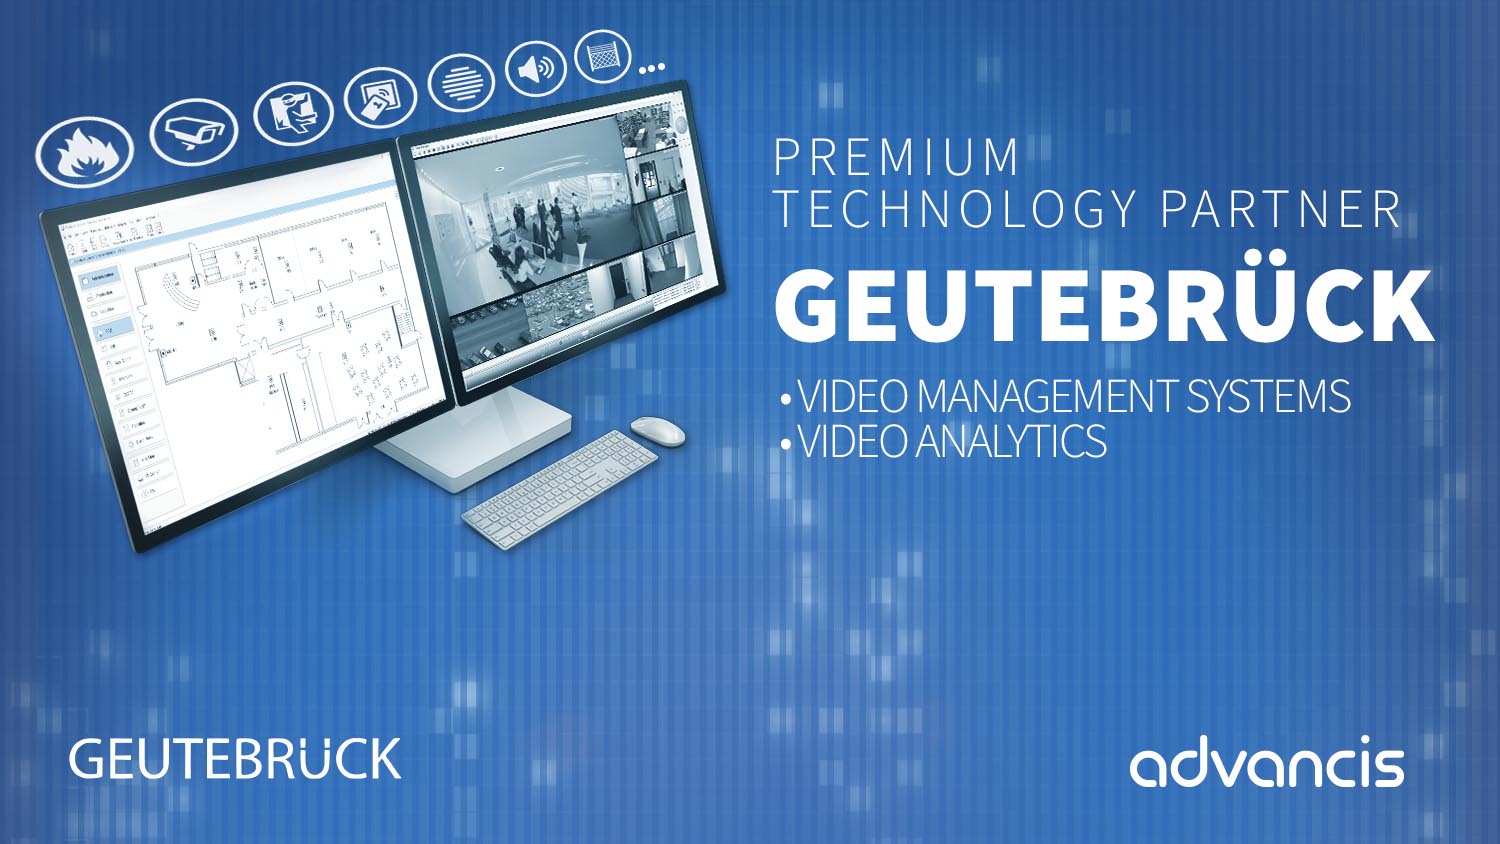 New Premium Technology Partner Geutebrück